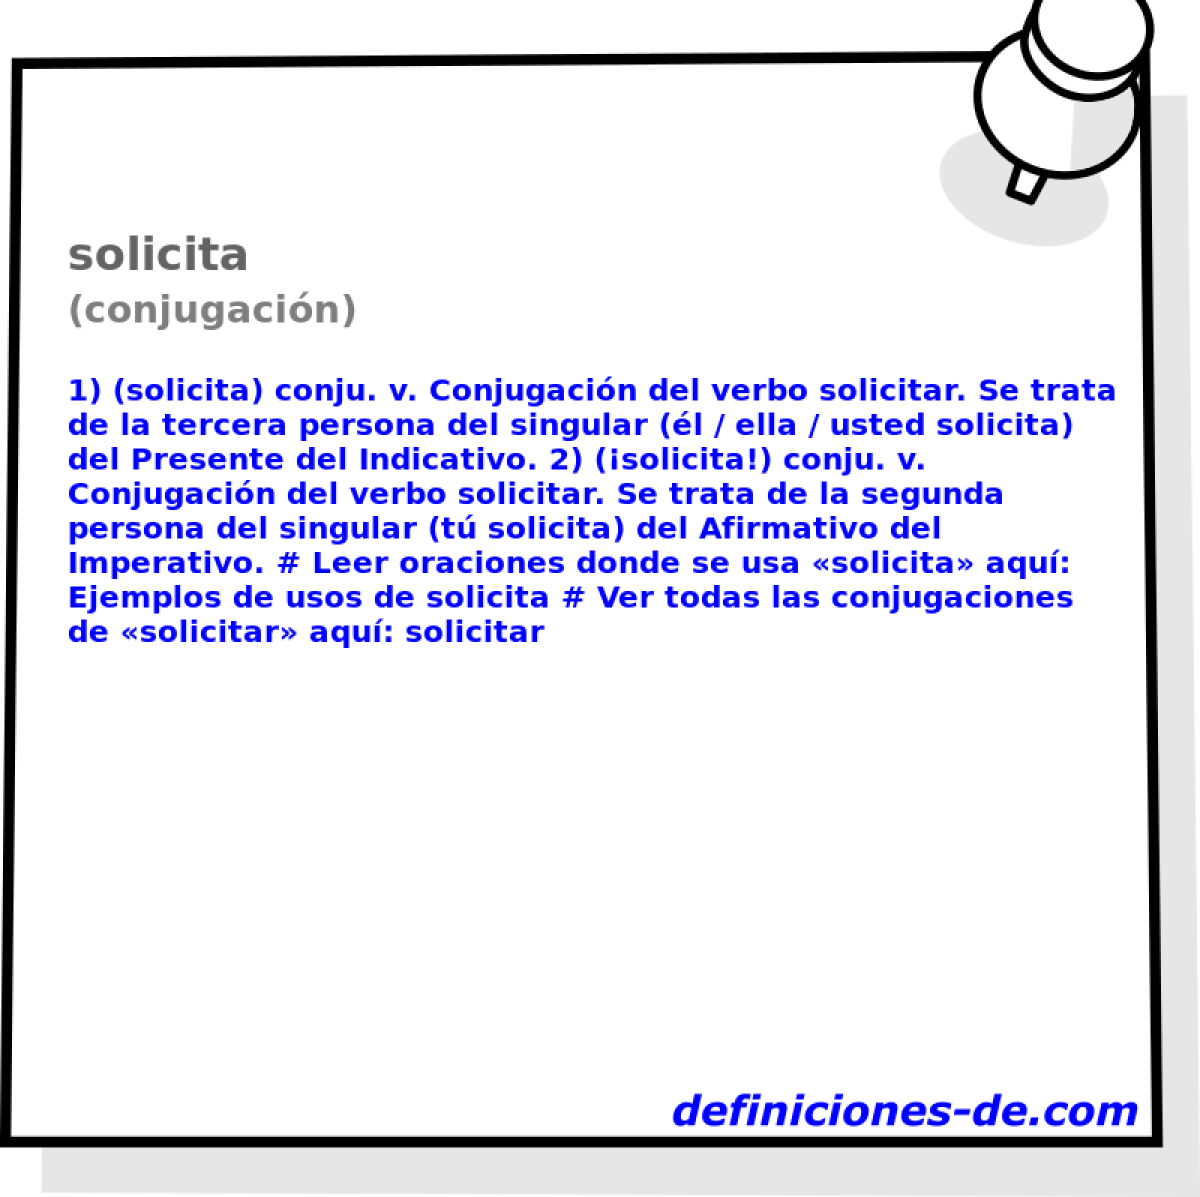 solicita (conjugacin)